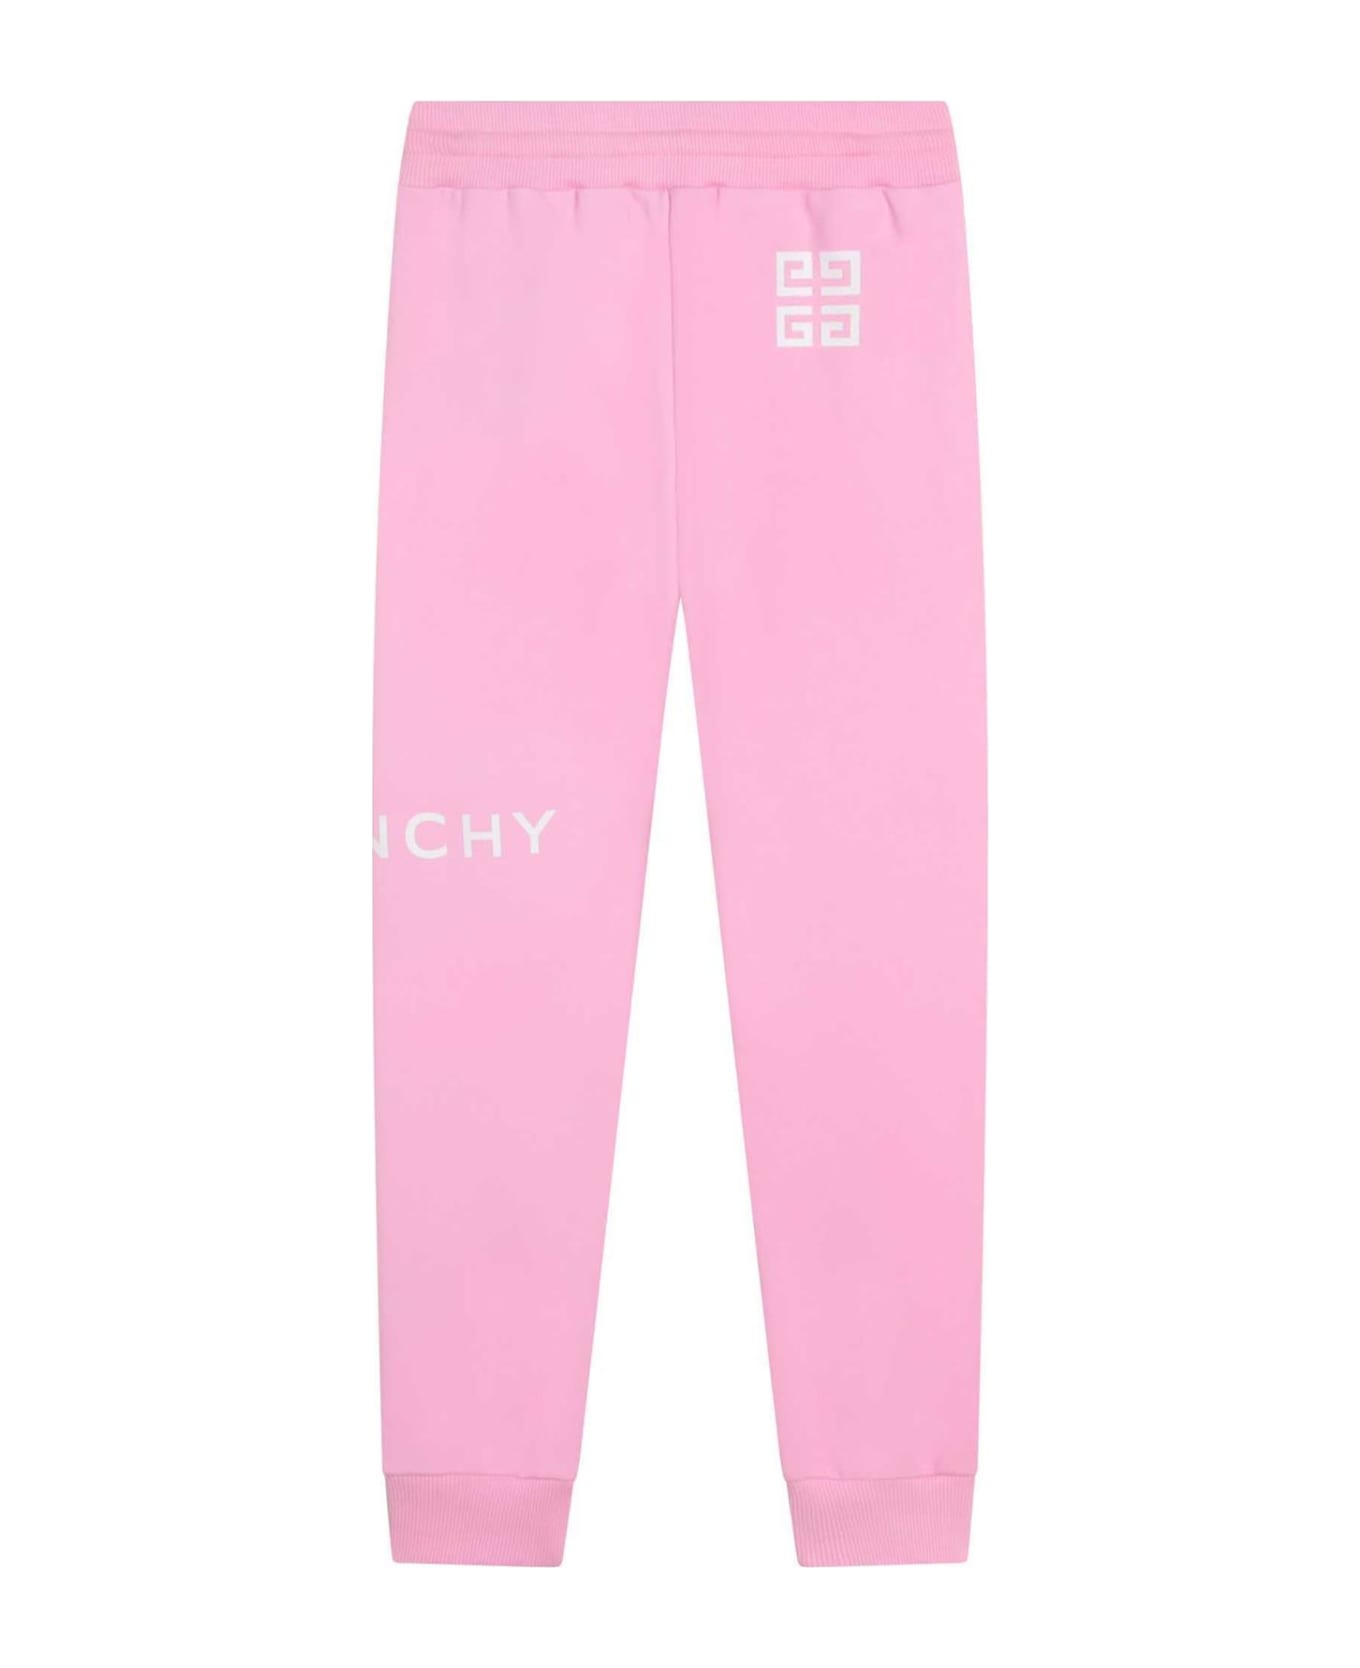 Givenchy Pants With Logo - Rosa